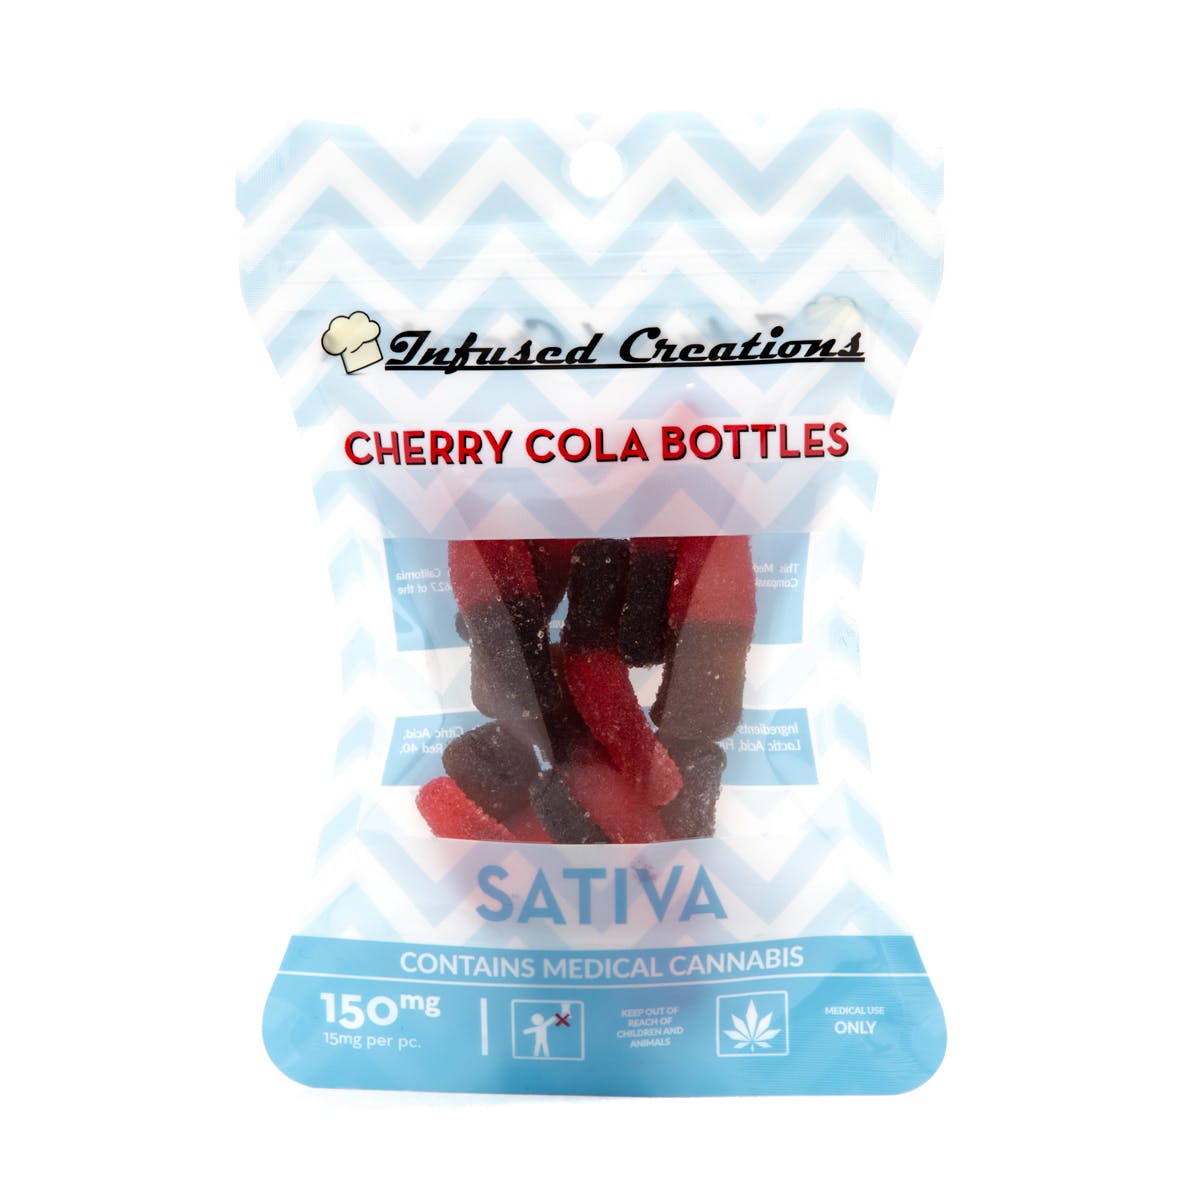 Cherry Cola Bottles Sativa, 150mg